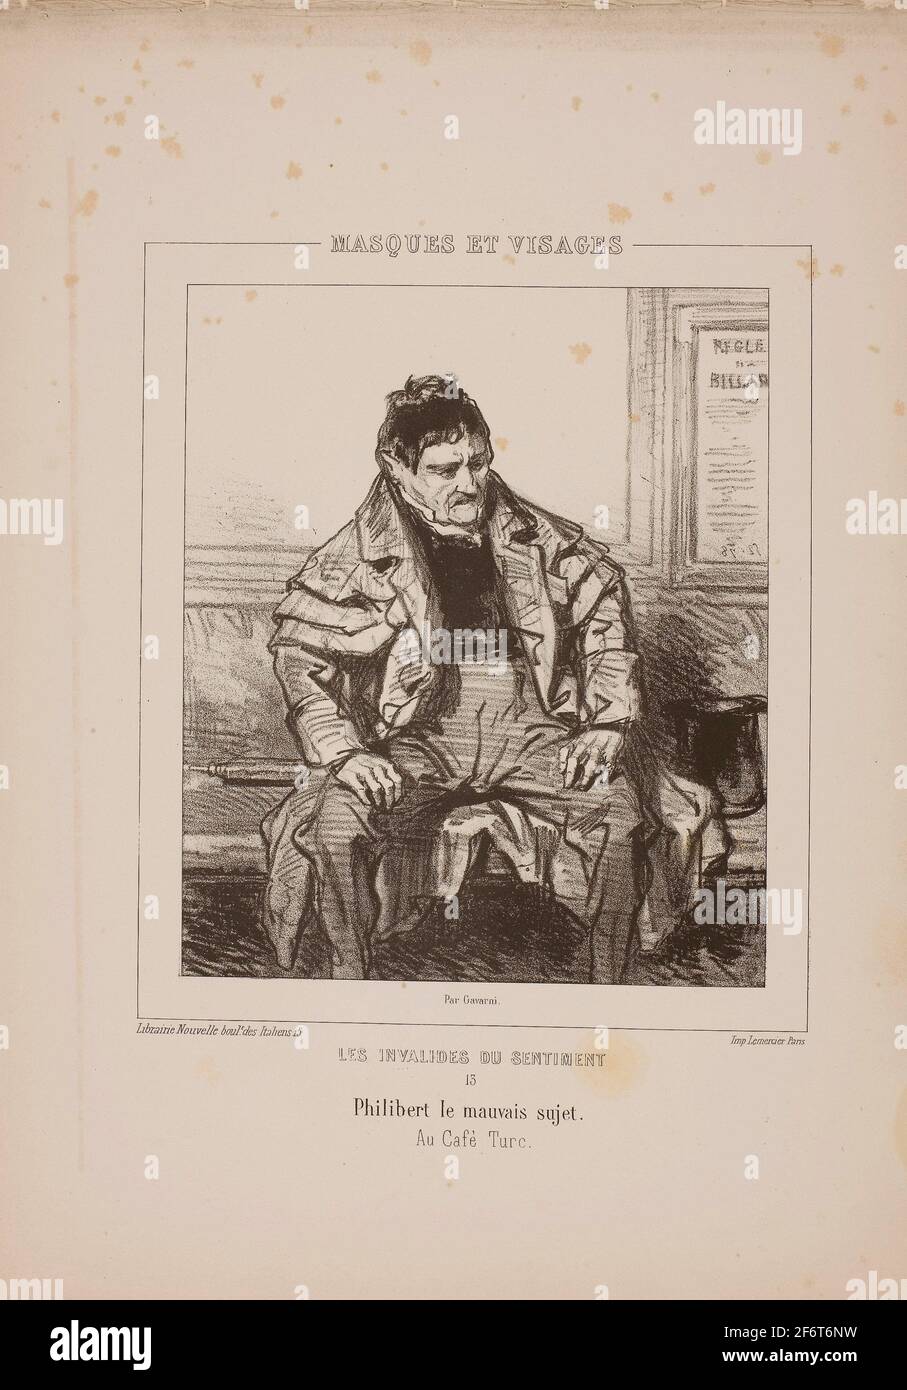 Author: Paul Gavarni. Les Invalides du Sentiment: Philibert le mauvais sujet - 1853 - Paul Gavarni French, 1804-1866. Lithograph in black on cream Stock Photo